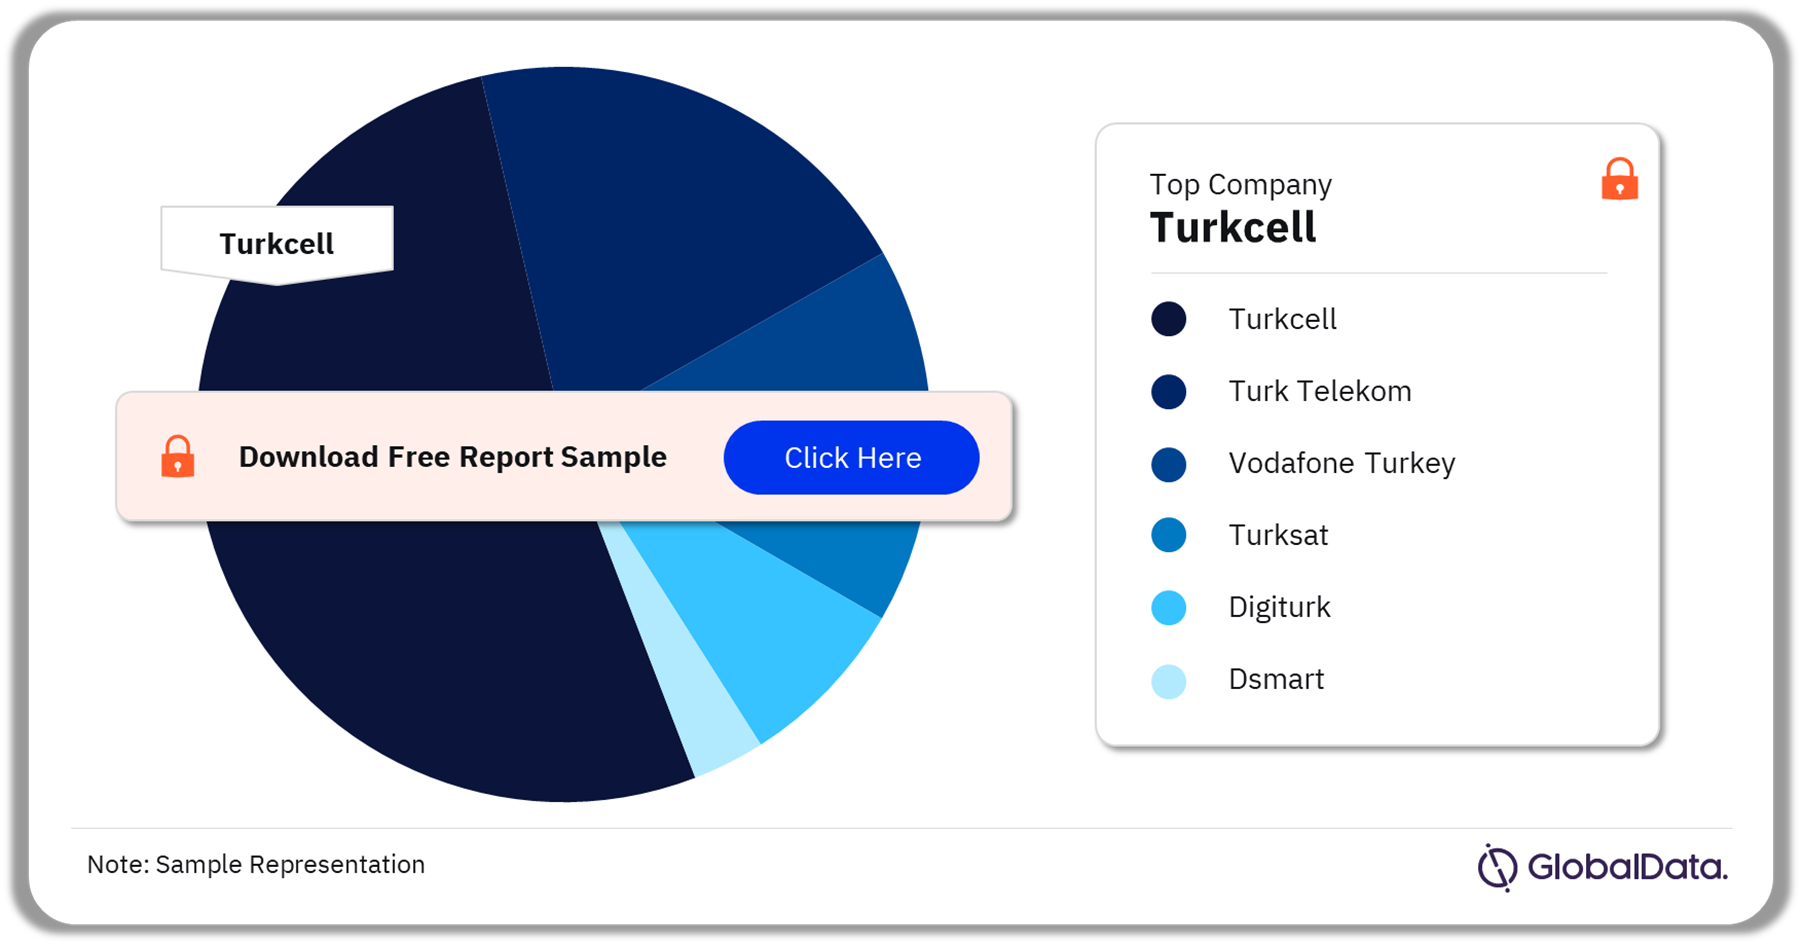 Turkey Telecom Services Market Share by Companies, 2023 (%)